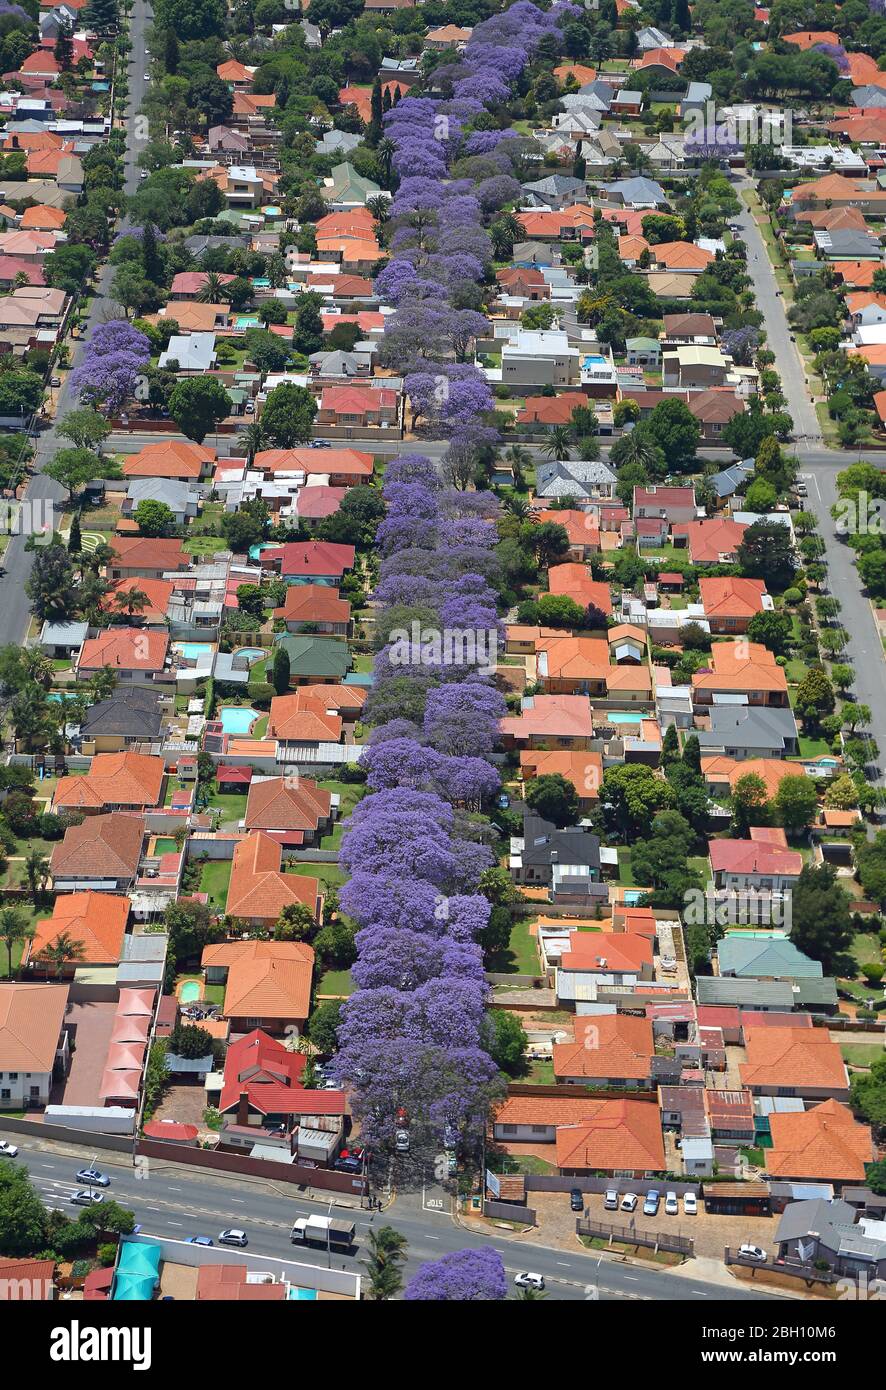 Aerial photo of jacaranda lined streets in Johannesburg Stock Photo